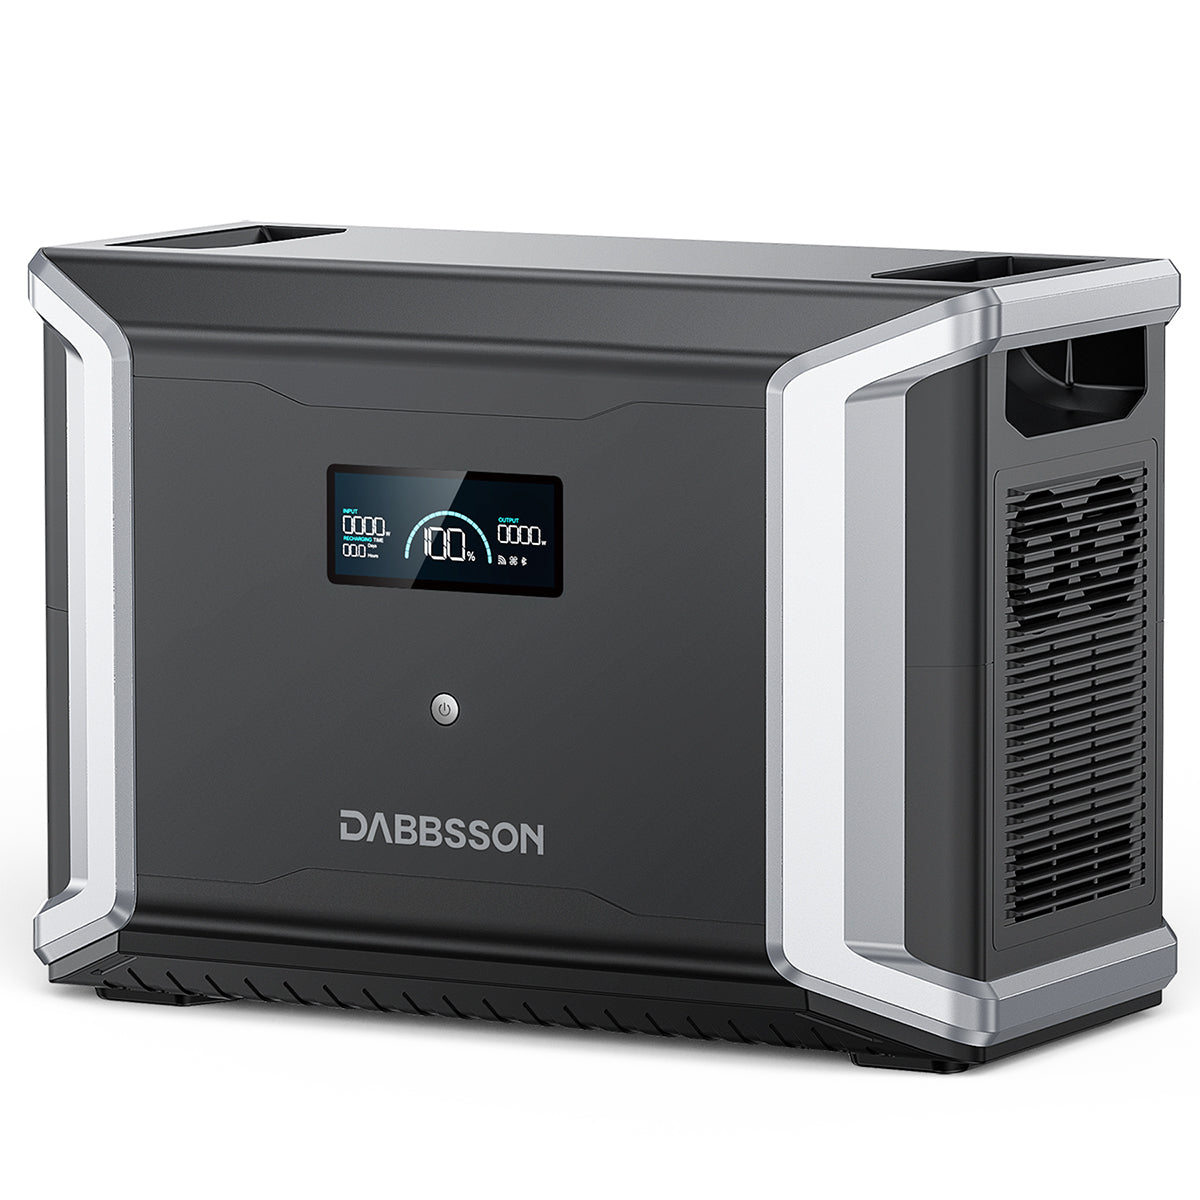 Dabbsson DBS3000B 容量拡張バッテリー DBS2300 & DBS2300 Plus 専用のエクストラバッテリー 3000Wh